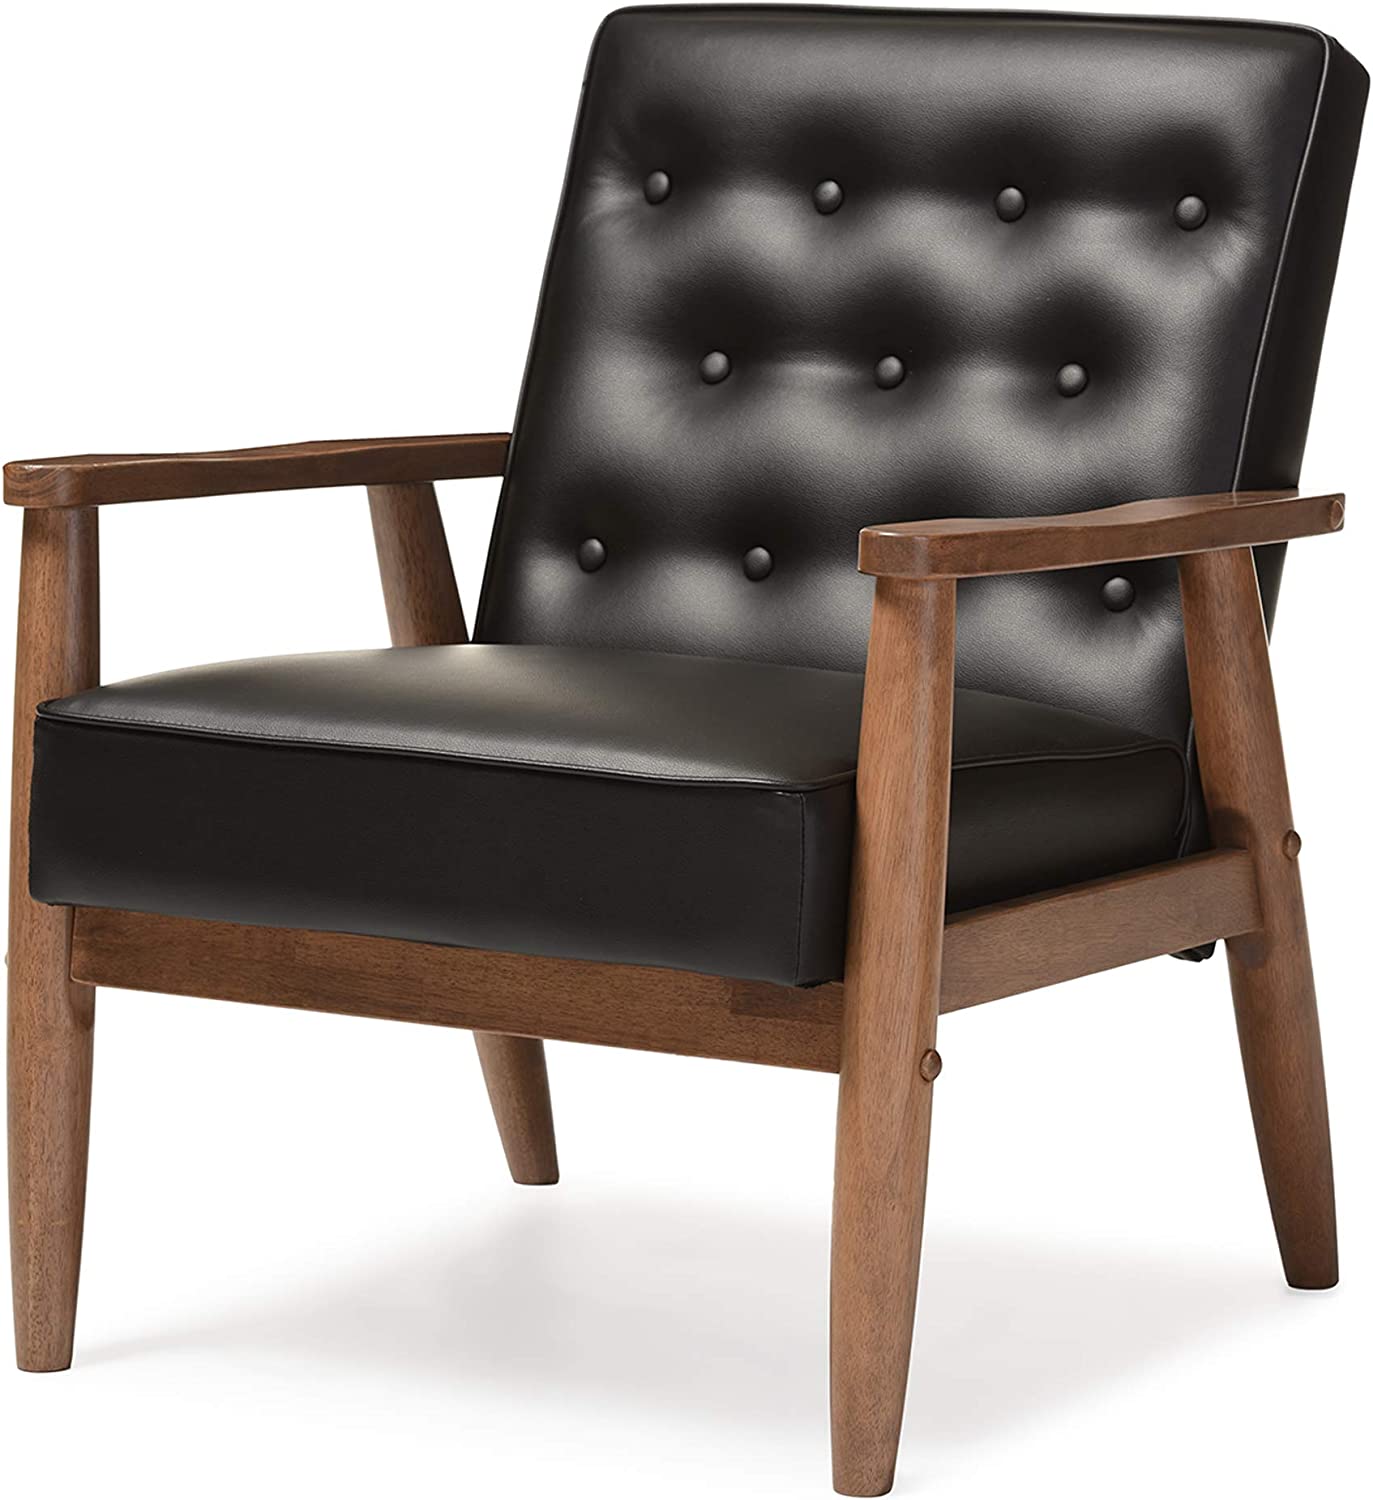 Baxton Studio BBT8013-Black Chair armchairs, Black